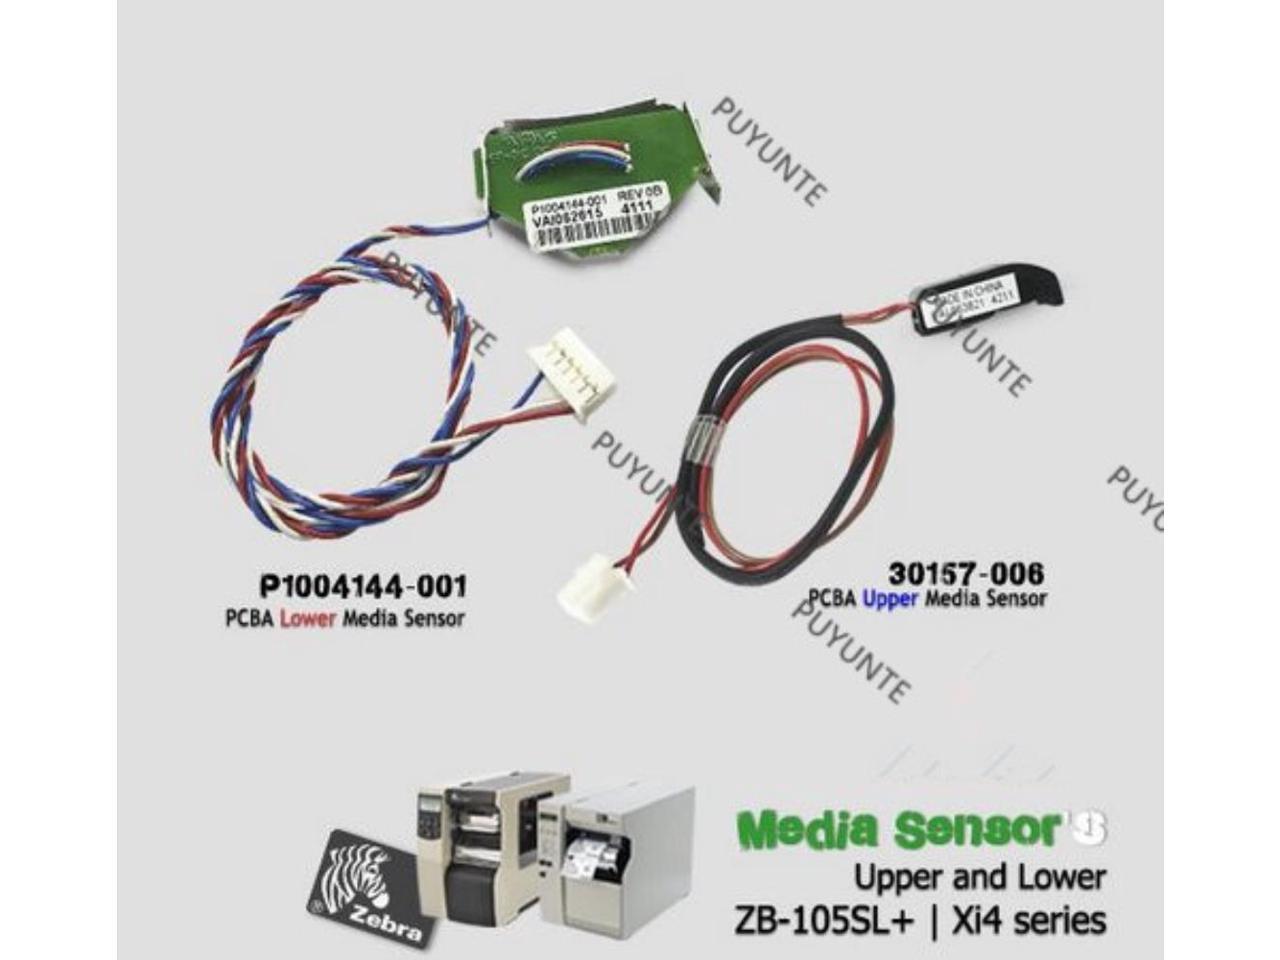 Media Sensors Upper And Lower Zebra Xi4 Series And 105sl Plus P1004144 001 30157 006 2504